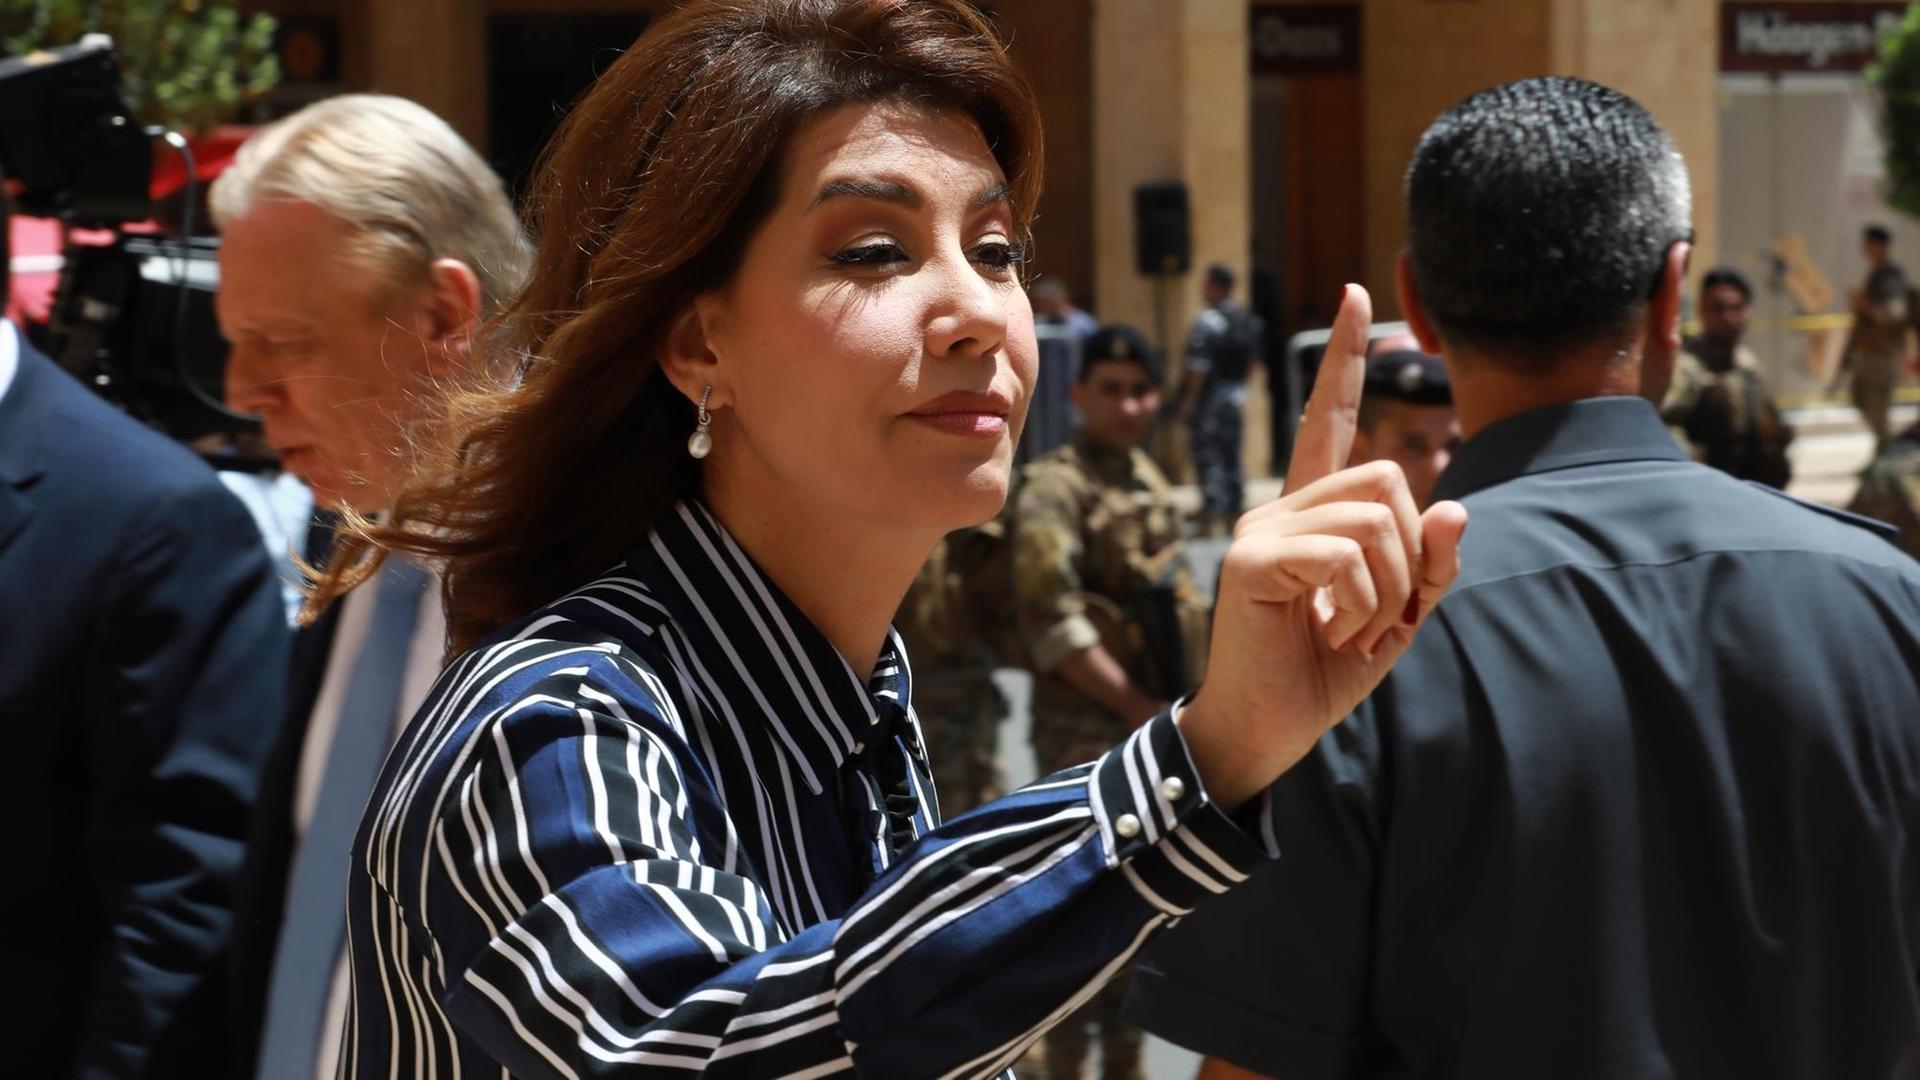 Die frischgewählte armenisch-libanesische Parlamentarierin Paula Yacoubian vor dem Parlament in Beirut, der Hauptstadt Libanons